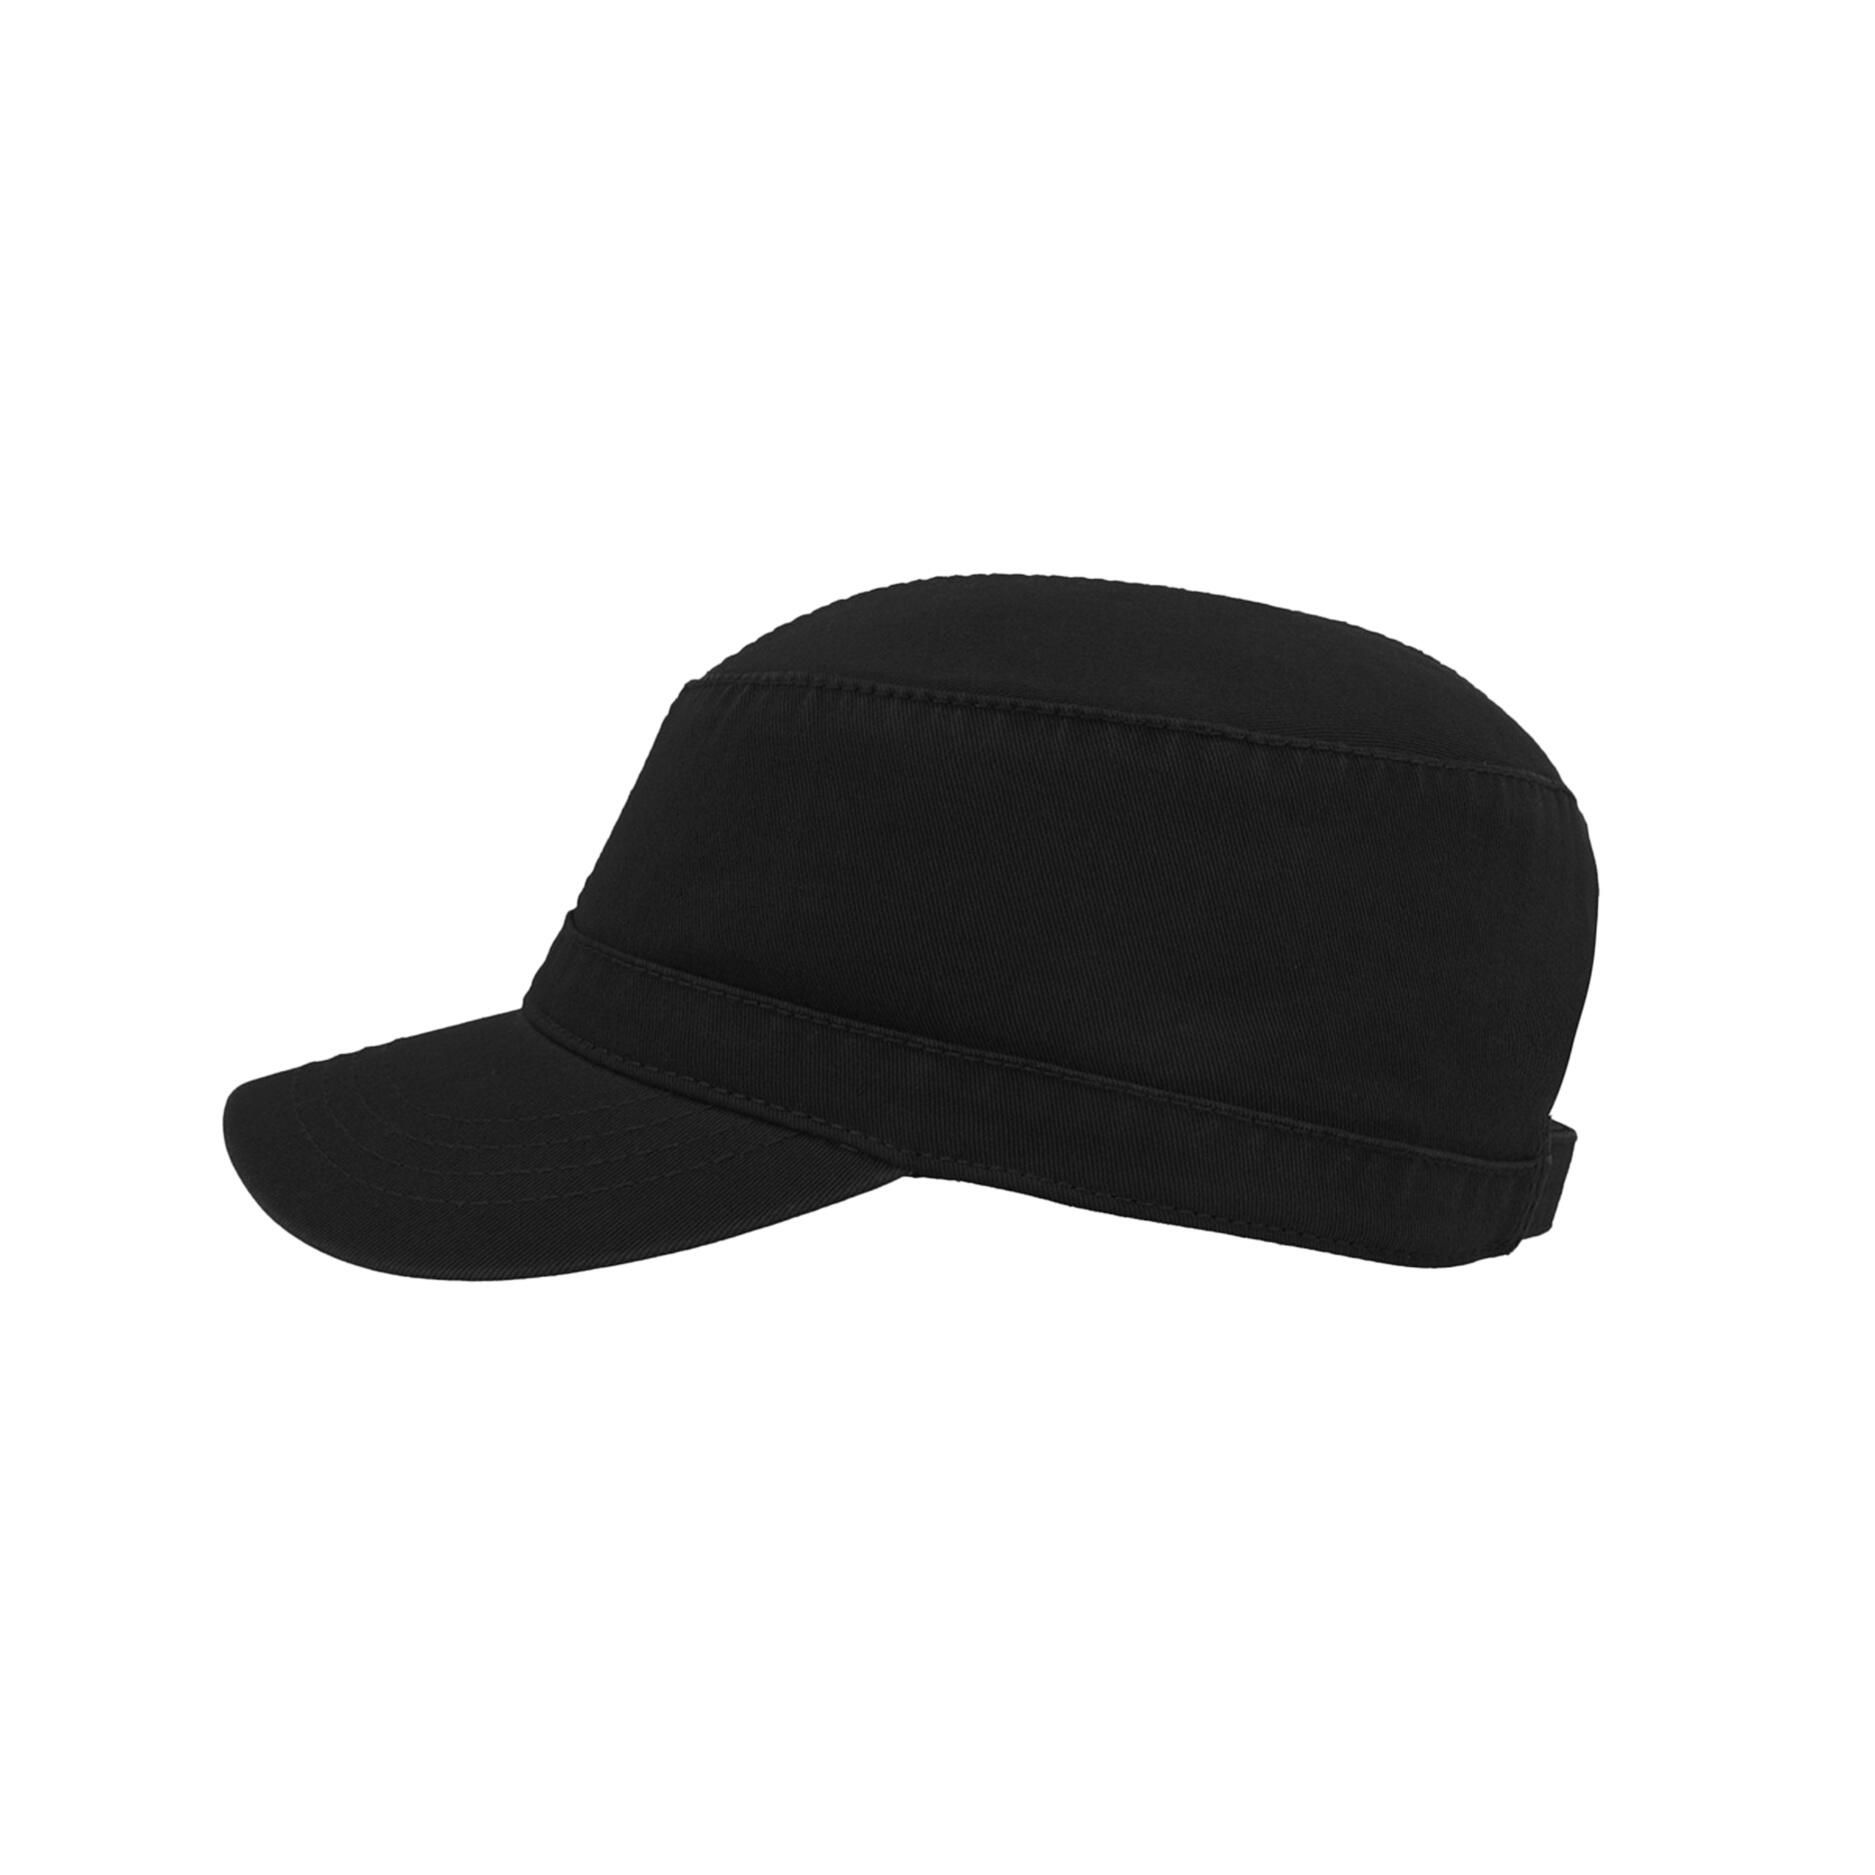 Chino Cotton Uniform Military Cap (Black) 4/5